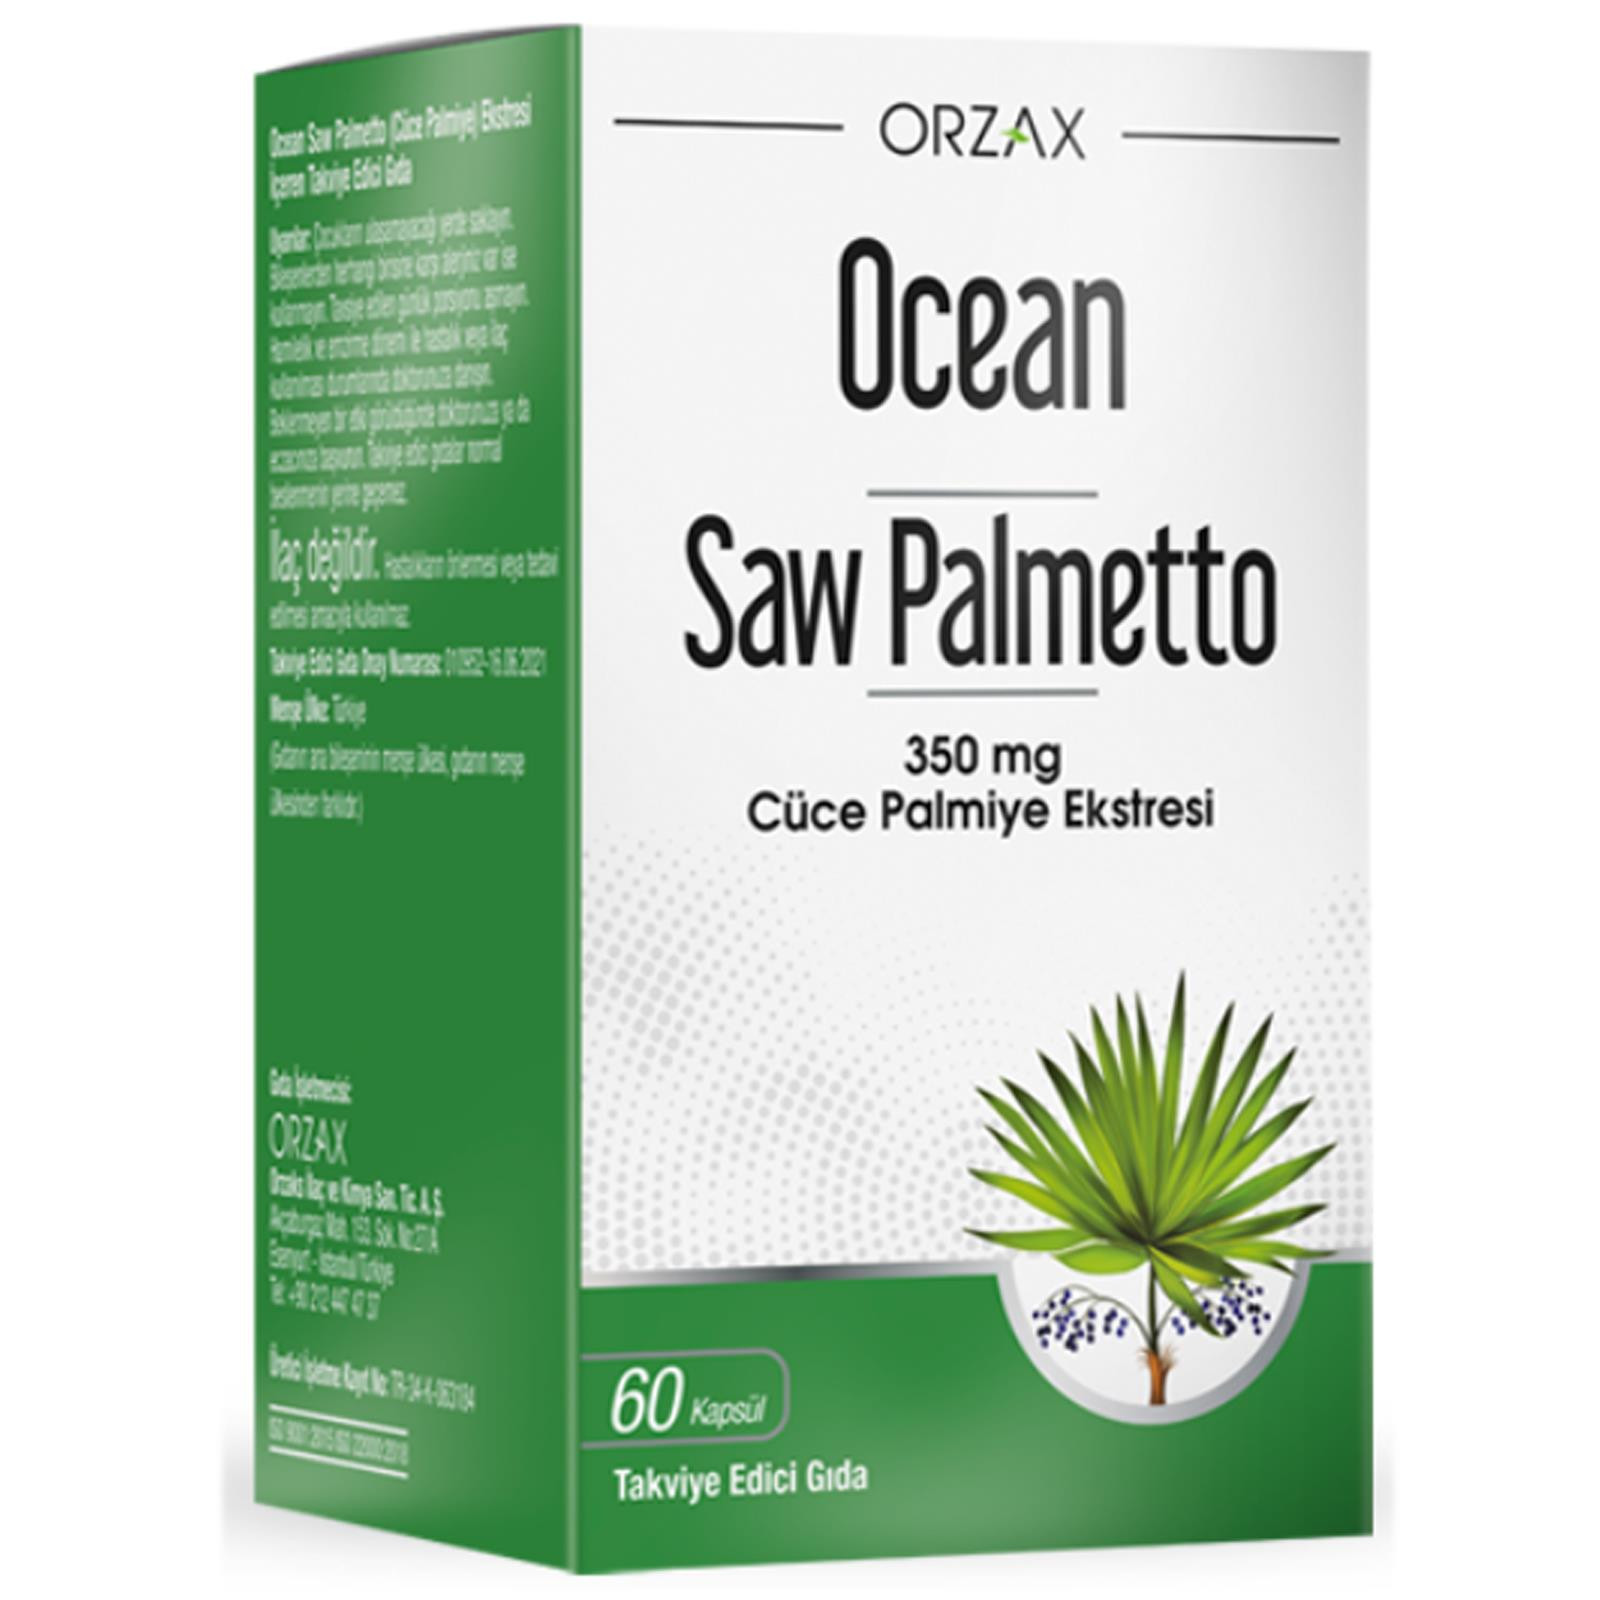 Ocean Saw Palmetto 350 mg 60 Kapsül